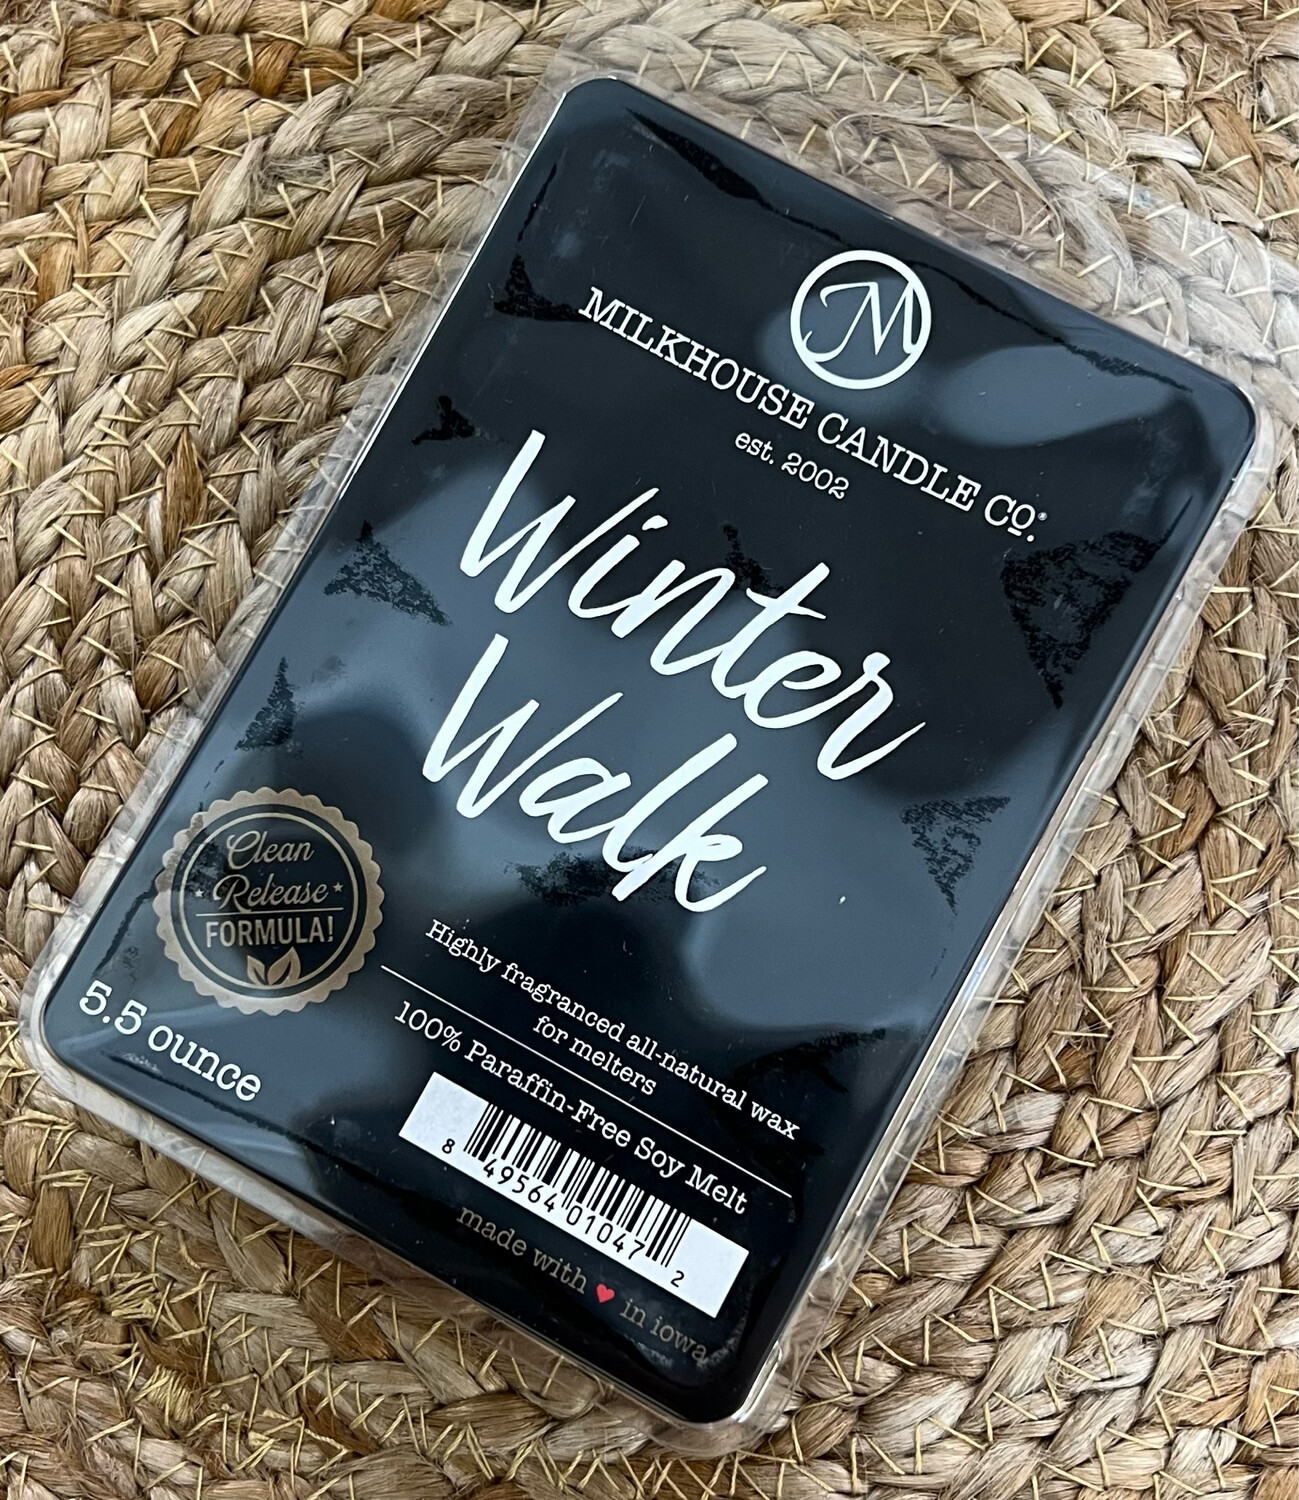 Winter Walk LG Melts